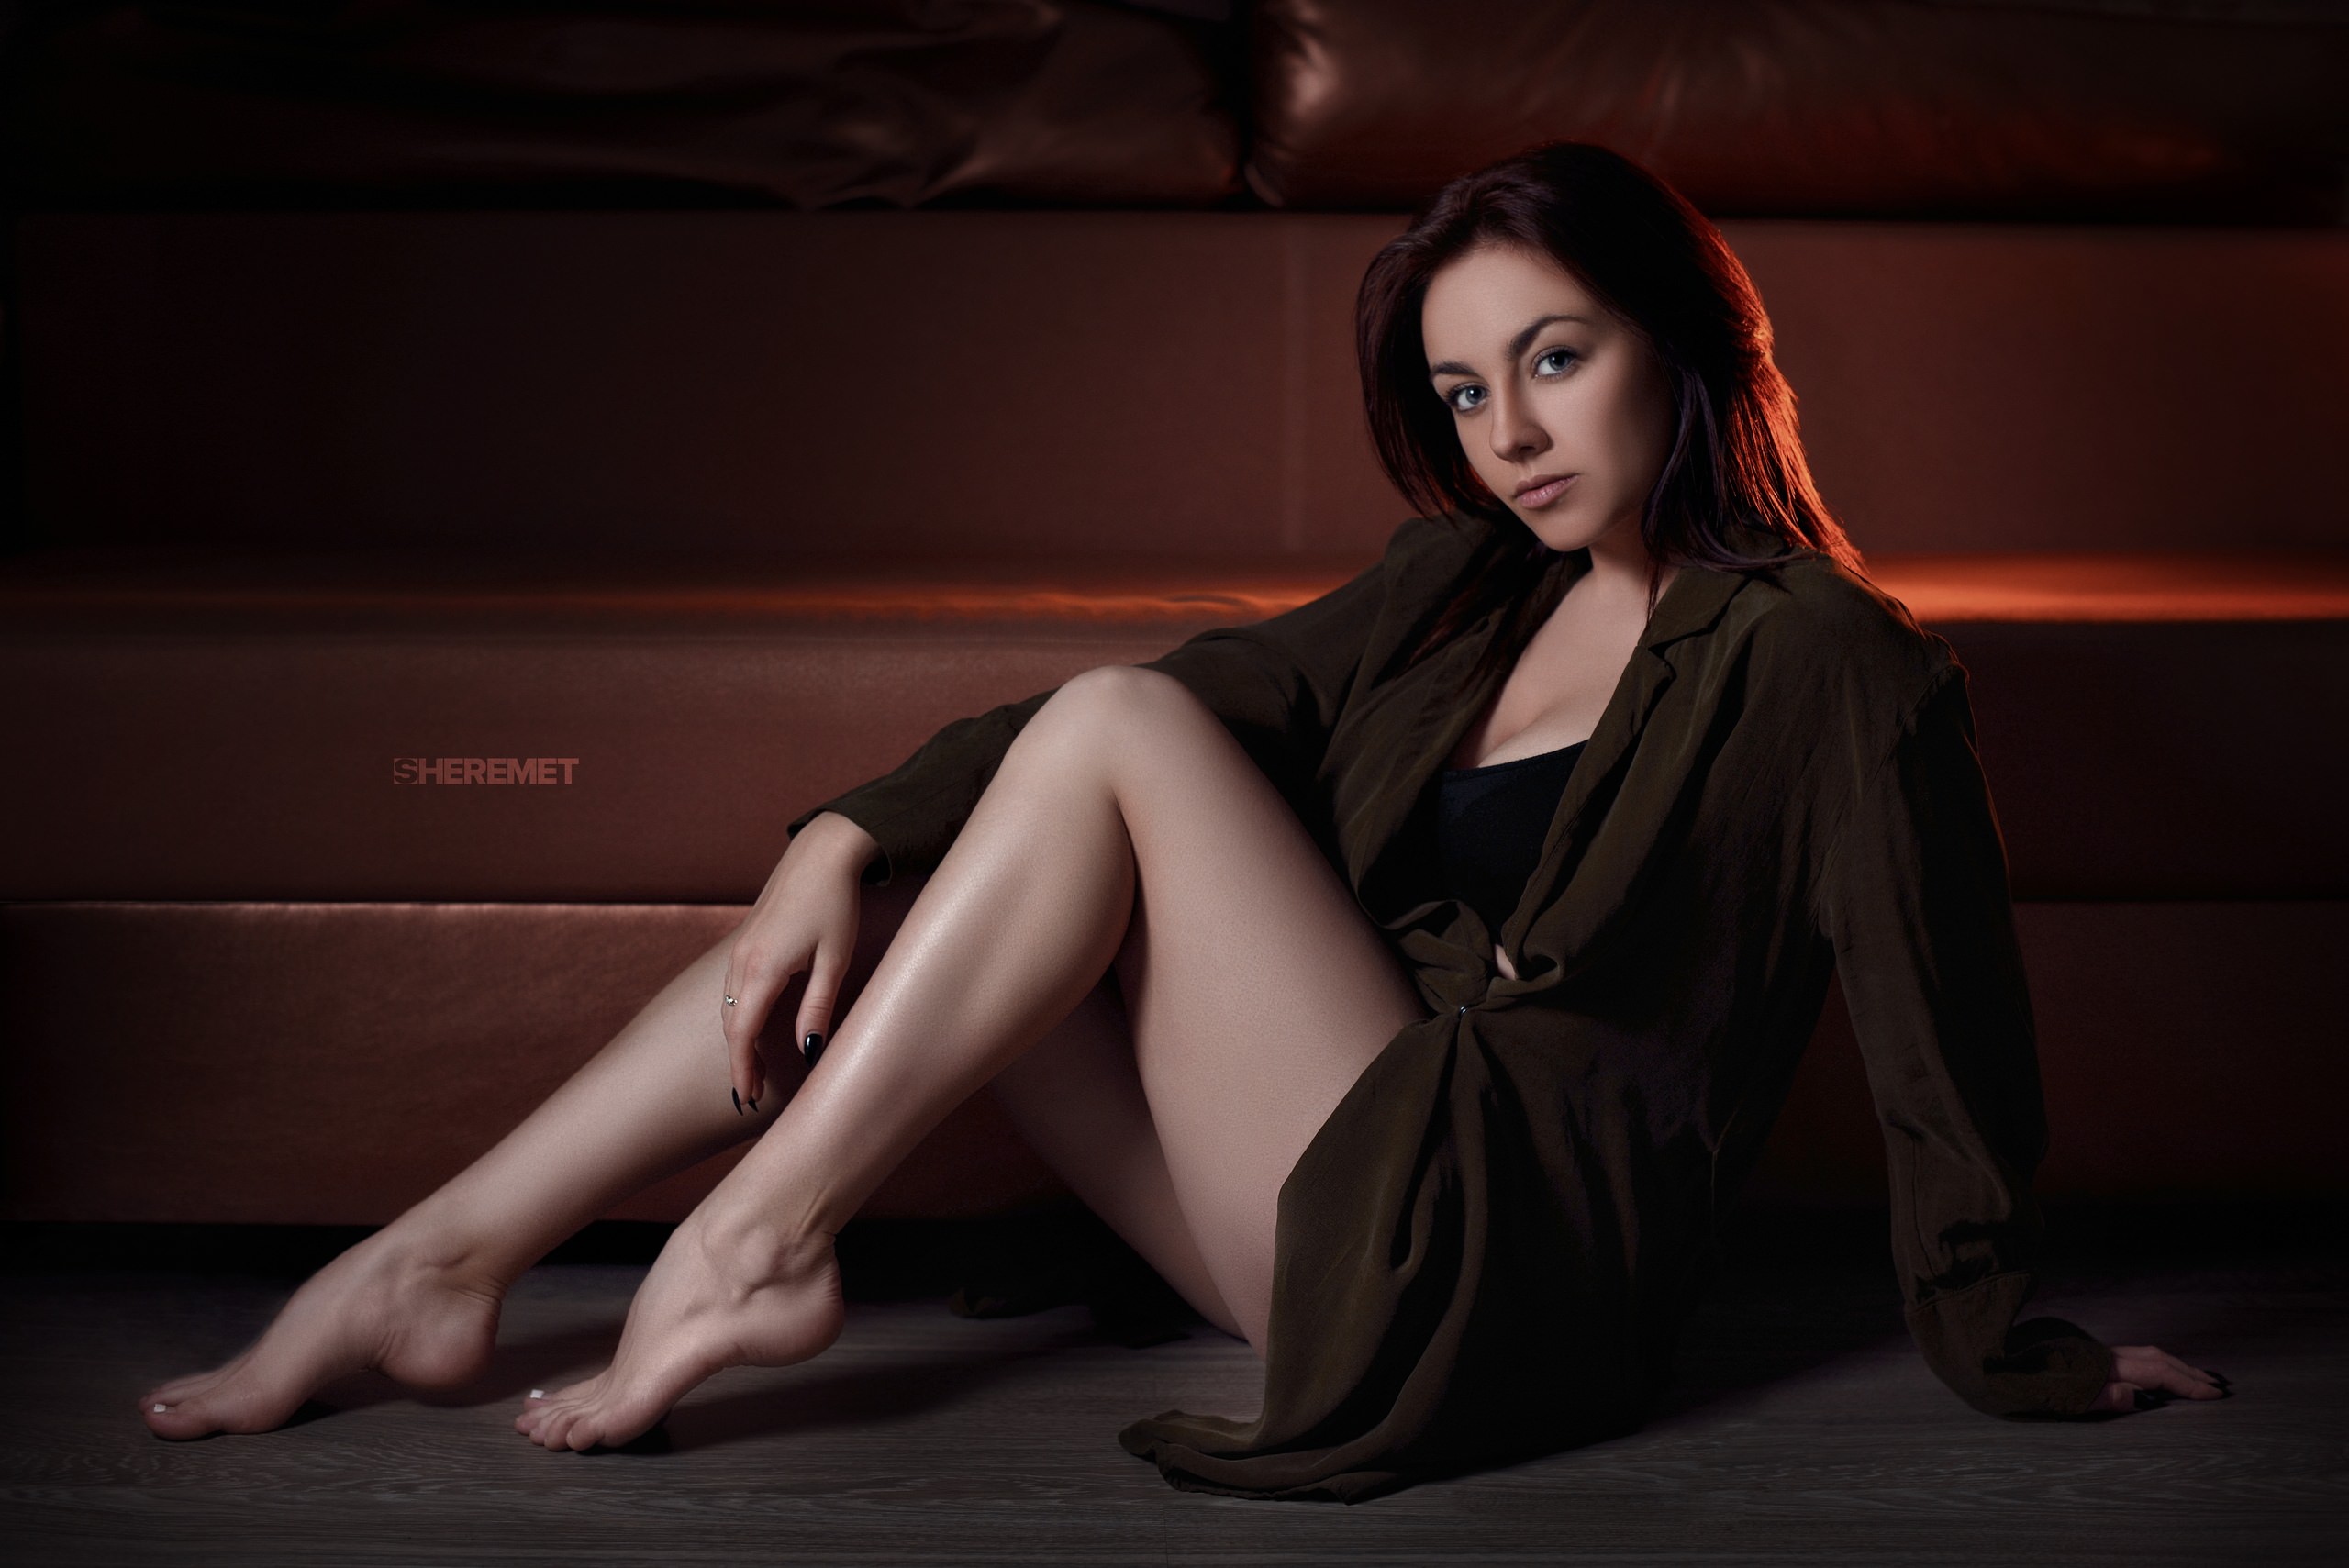 Women Sitting Couch Black Nails Legs On The Floor Ivan Sheremet Model